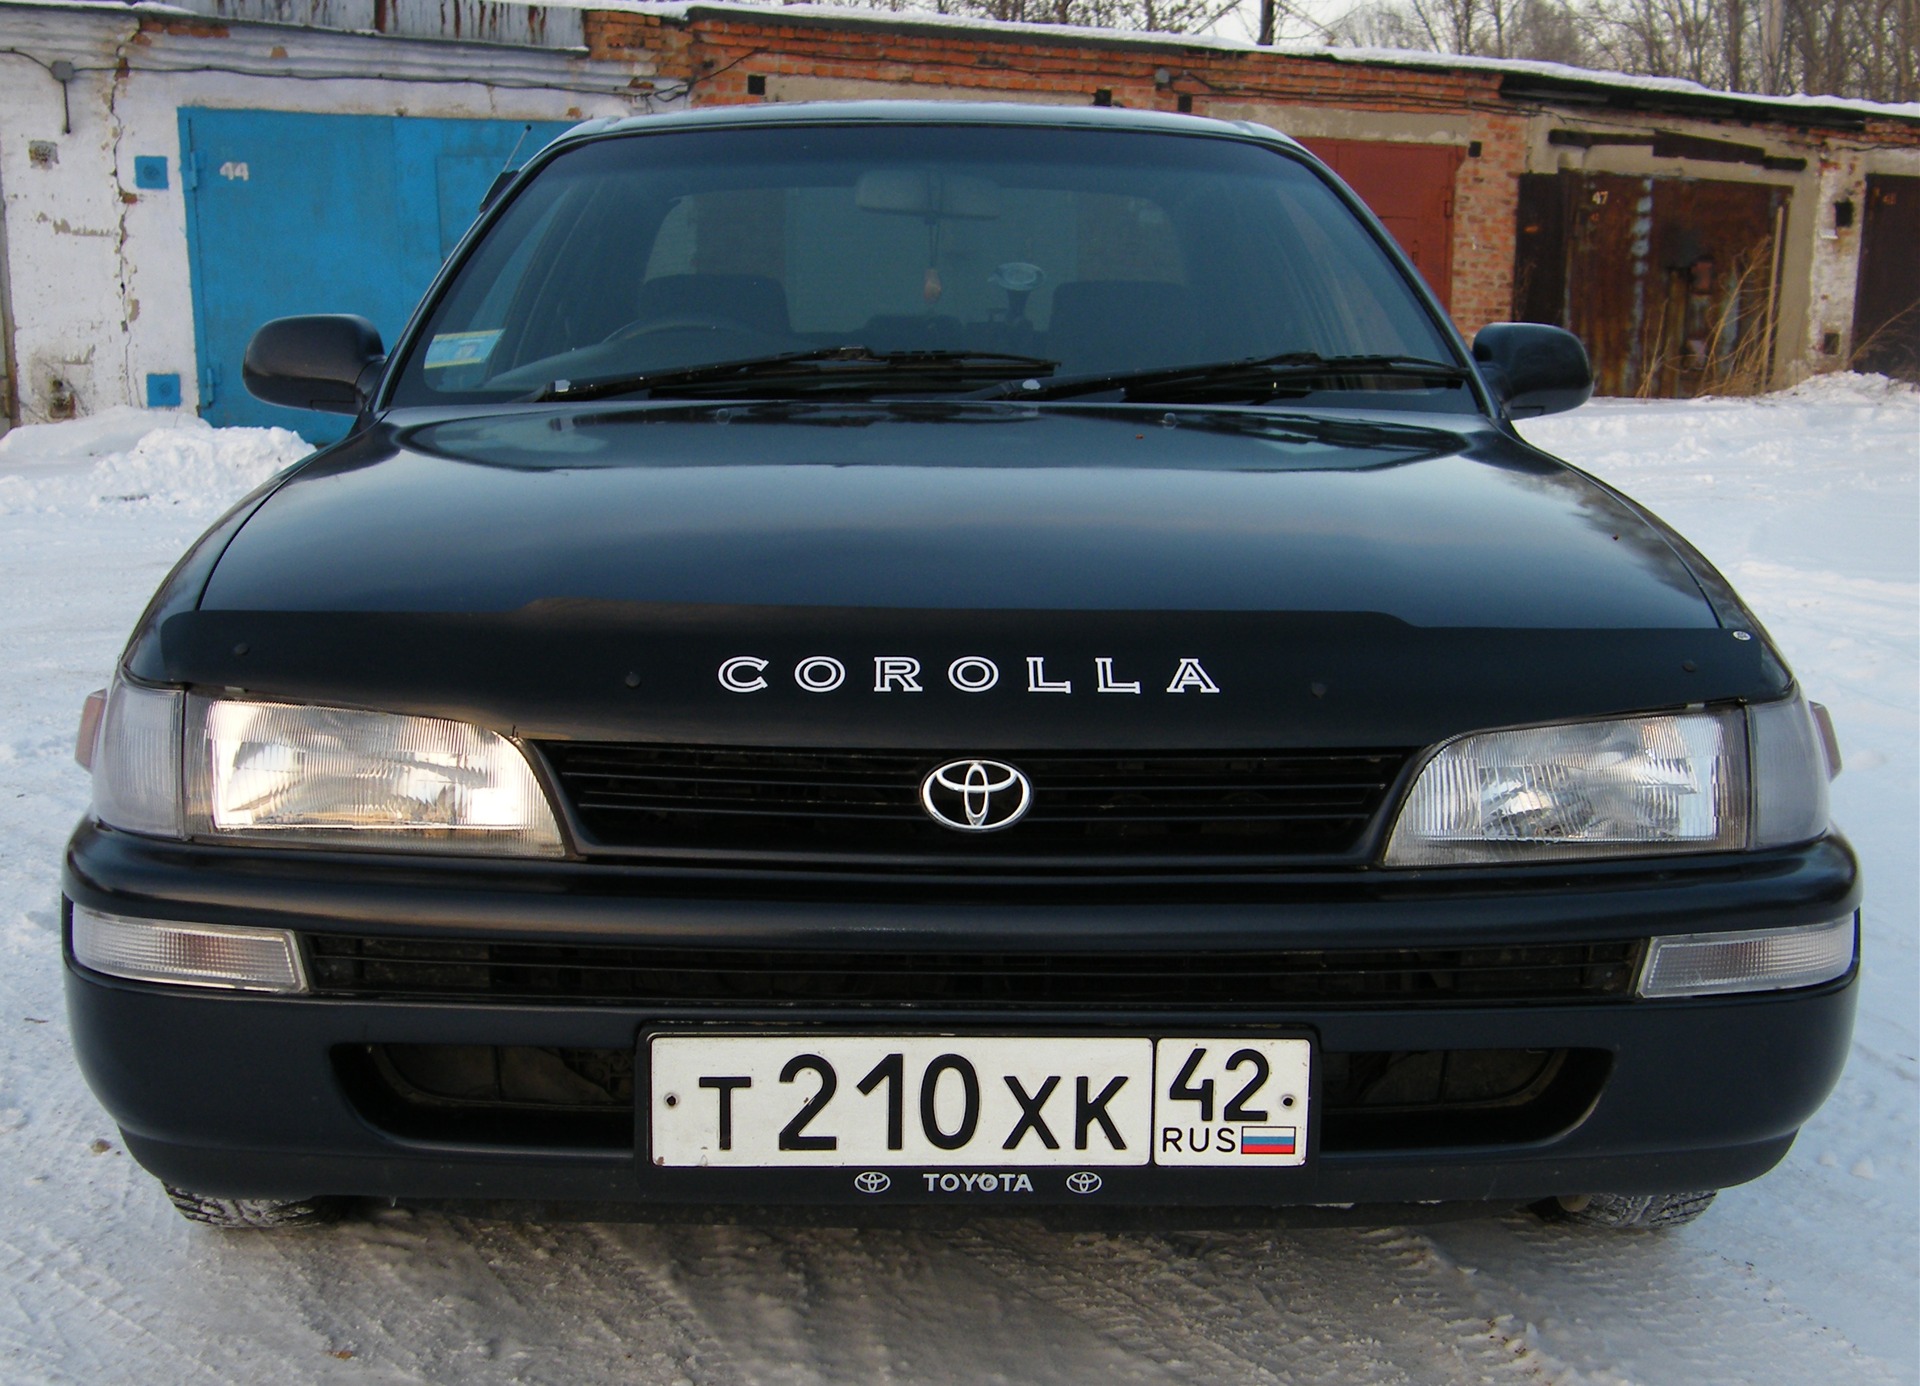 24 2010 Toyota Corolla 15 1992